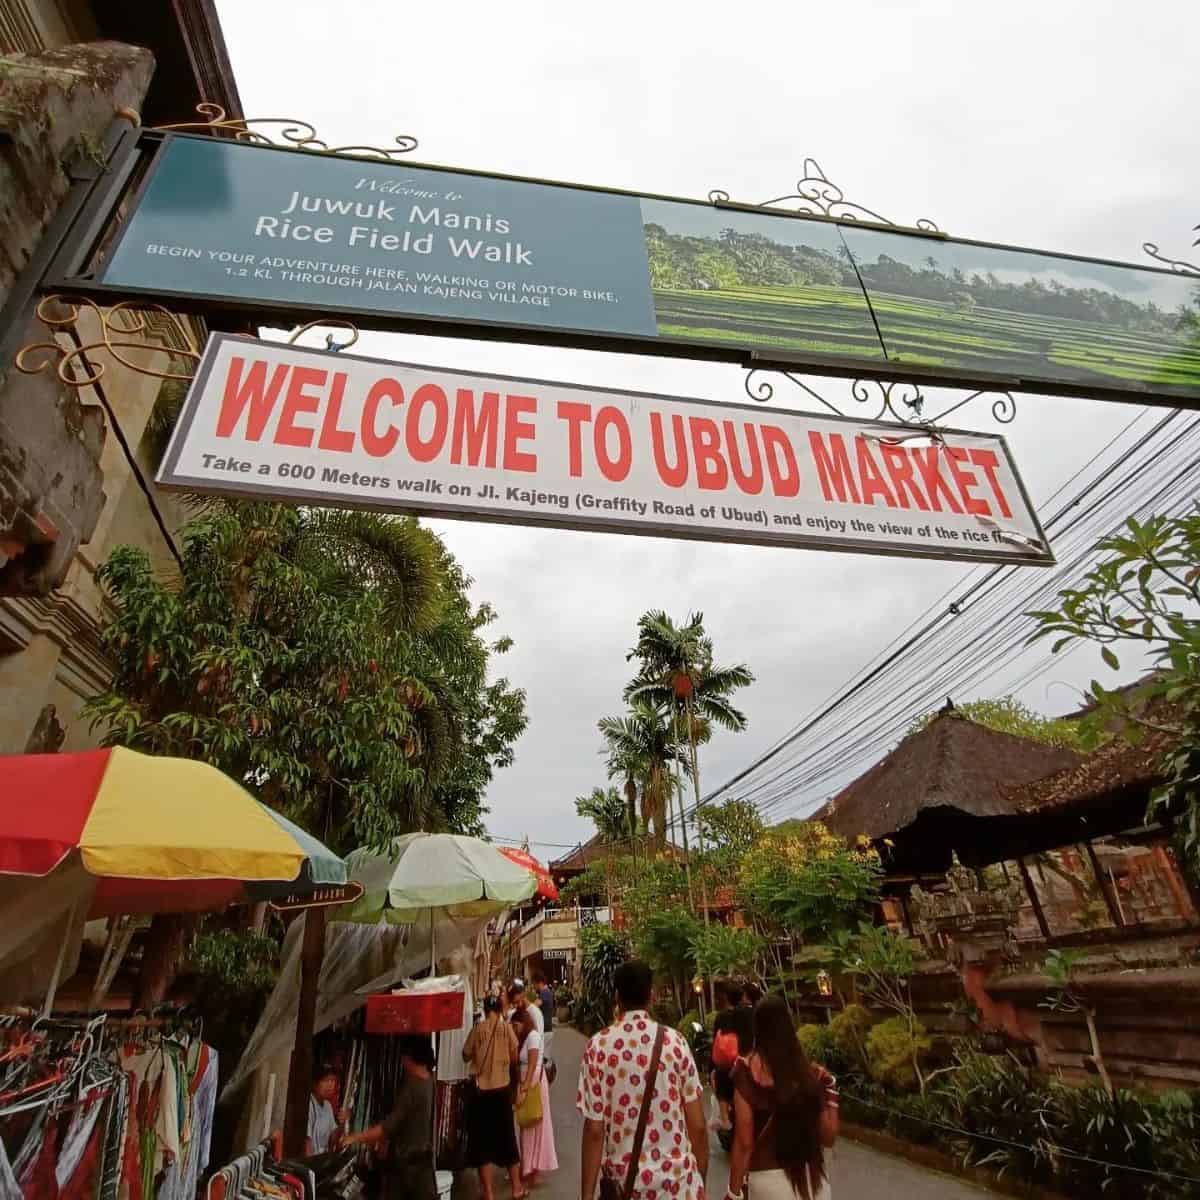 Ubud Market welcome signage with people walking around the area